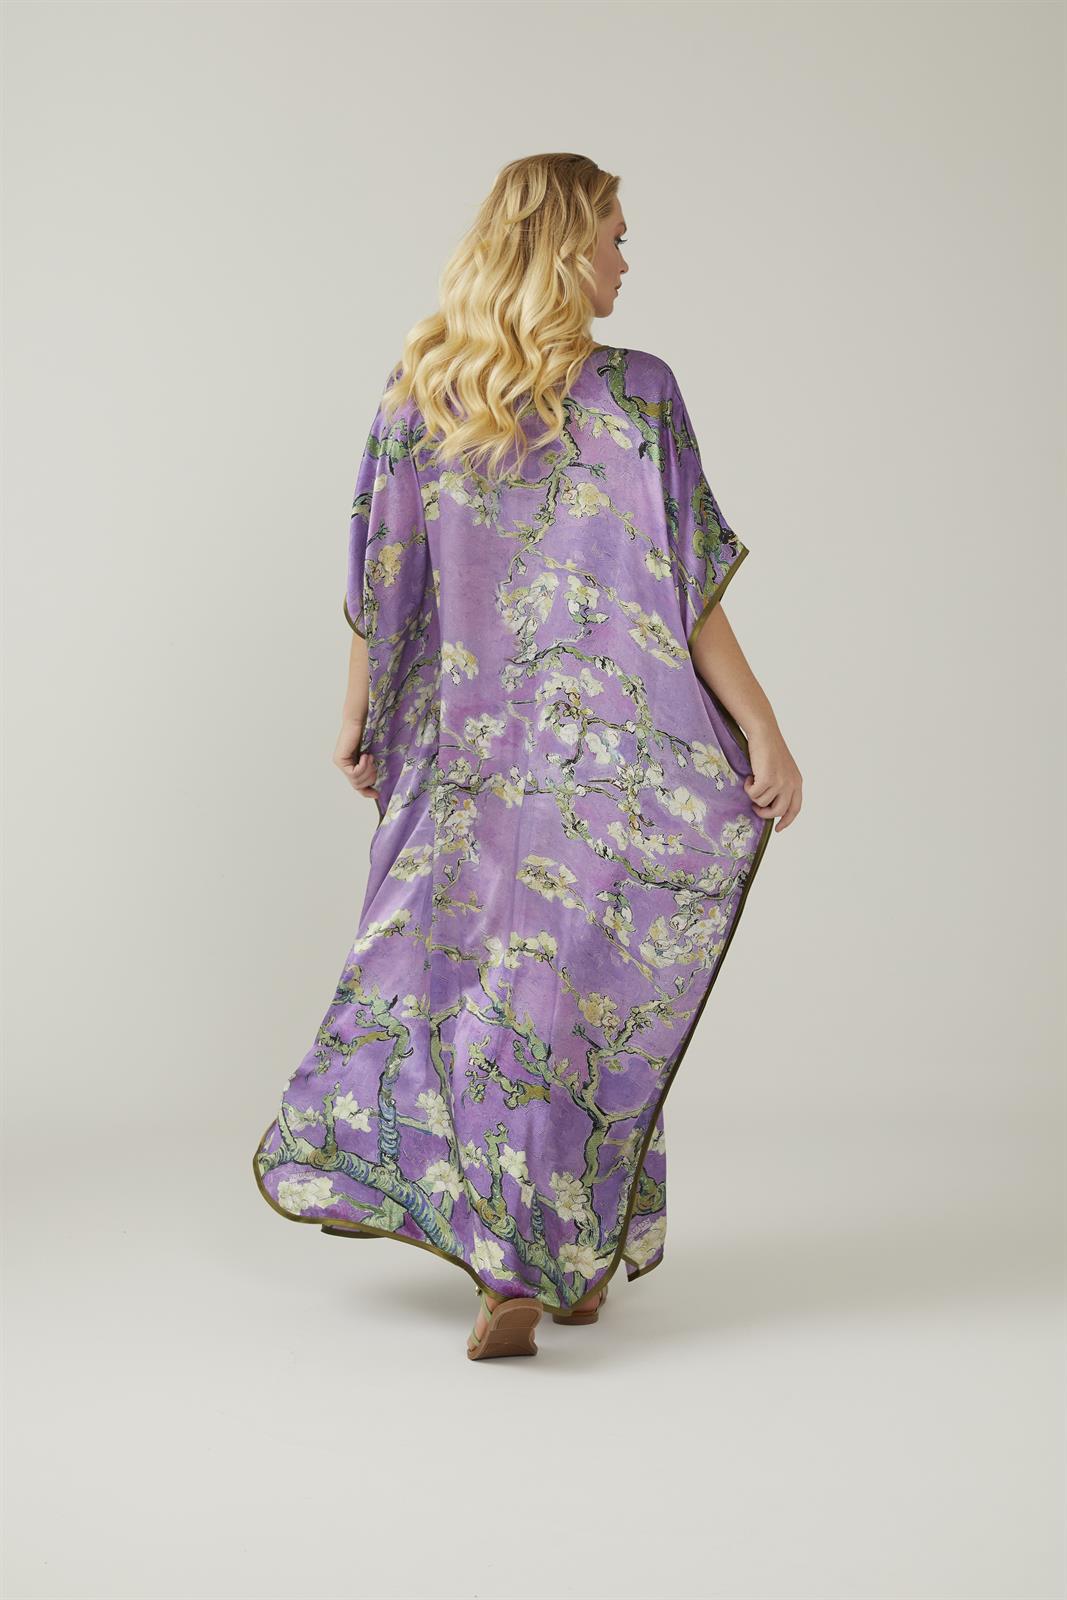 Ikigai The City Purple Van Gogh Almond Blossoms Patterned Satin Silk Dress / Kaftan